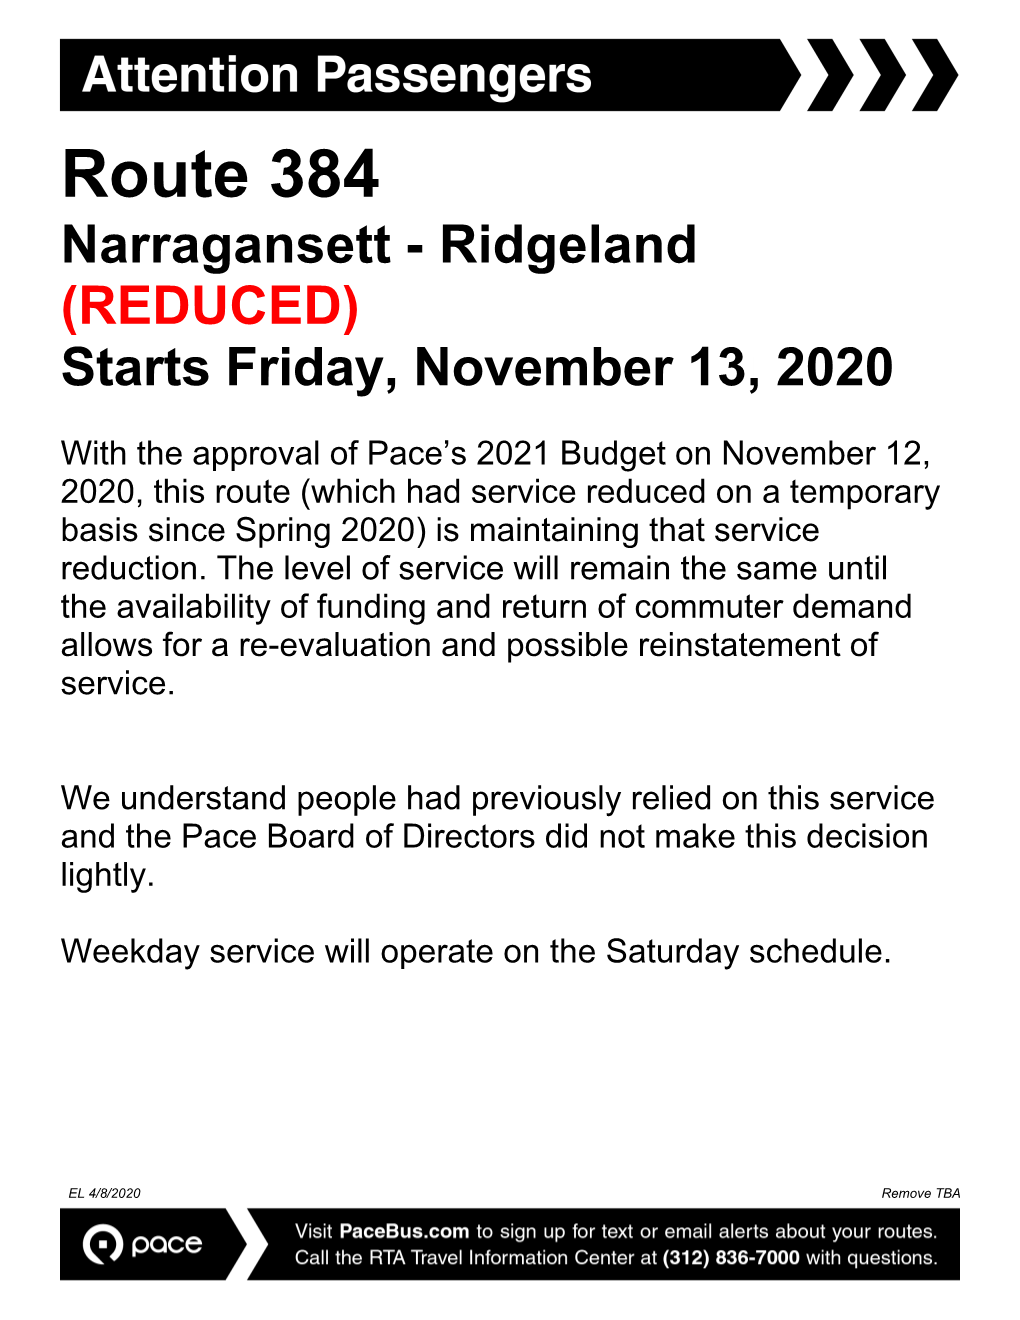 Route 384 Narragansett - Ridgeland (REDUCED) Starts Friday, November 13, 2020